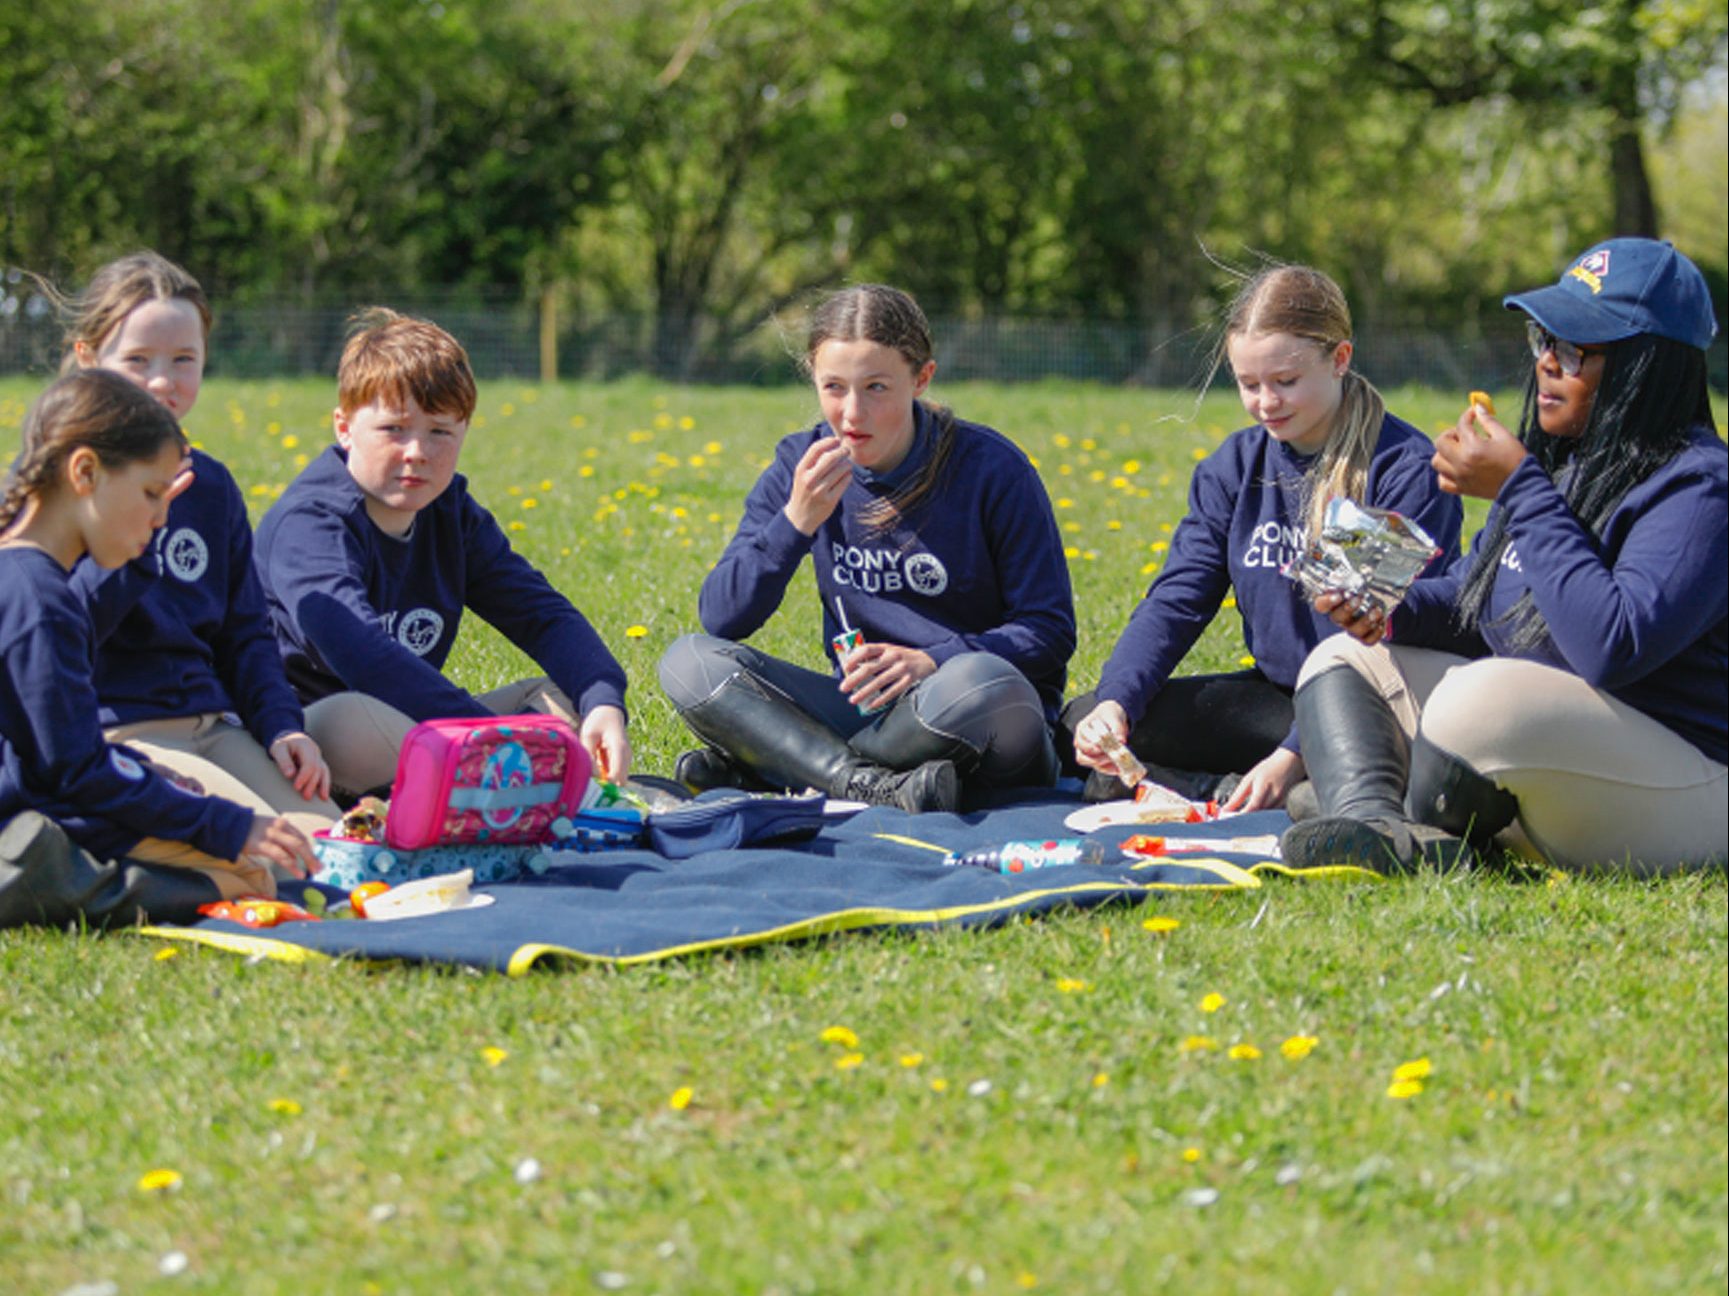 A group of 6 children enjoying a picnic